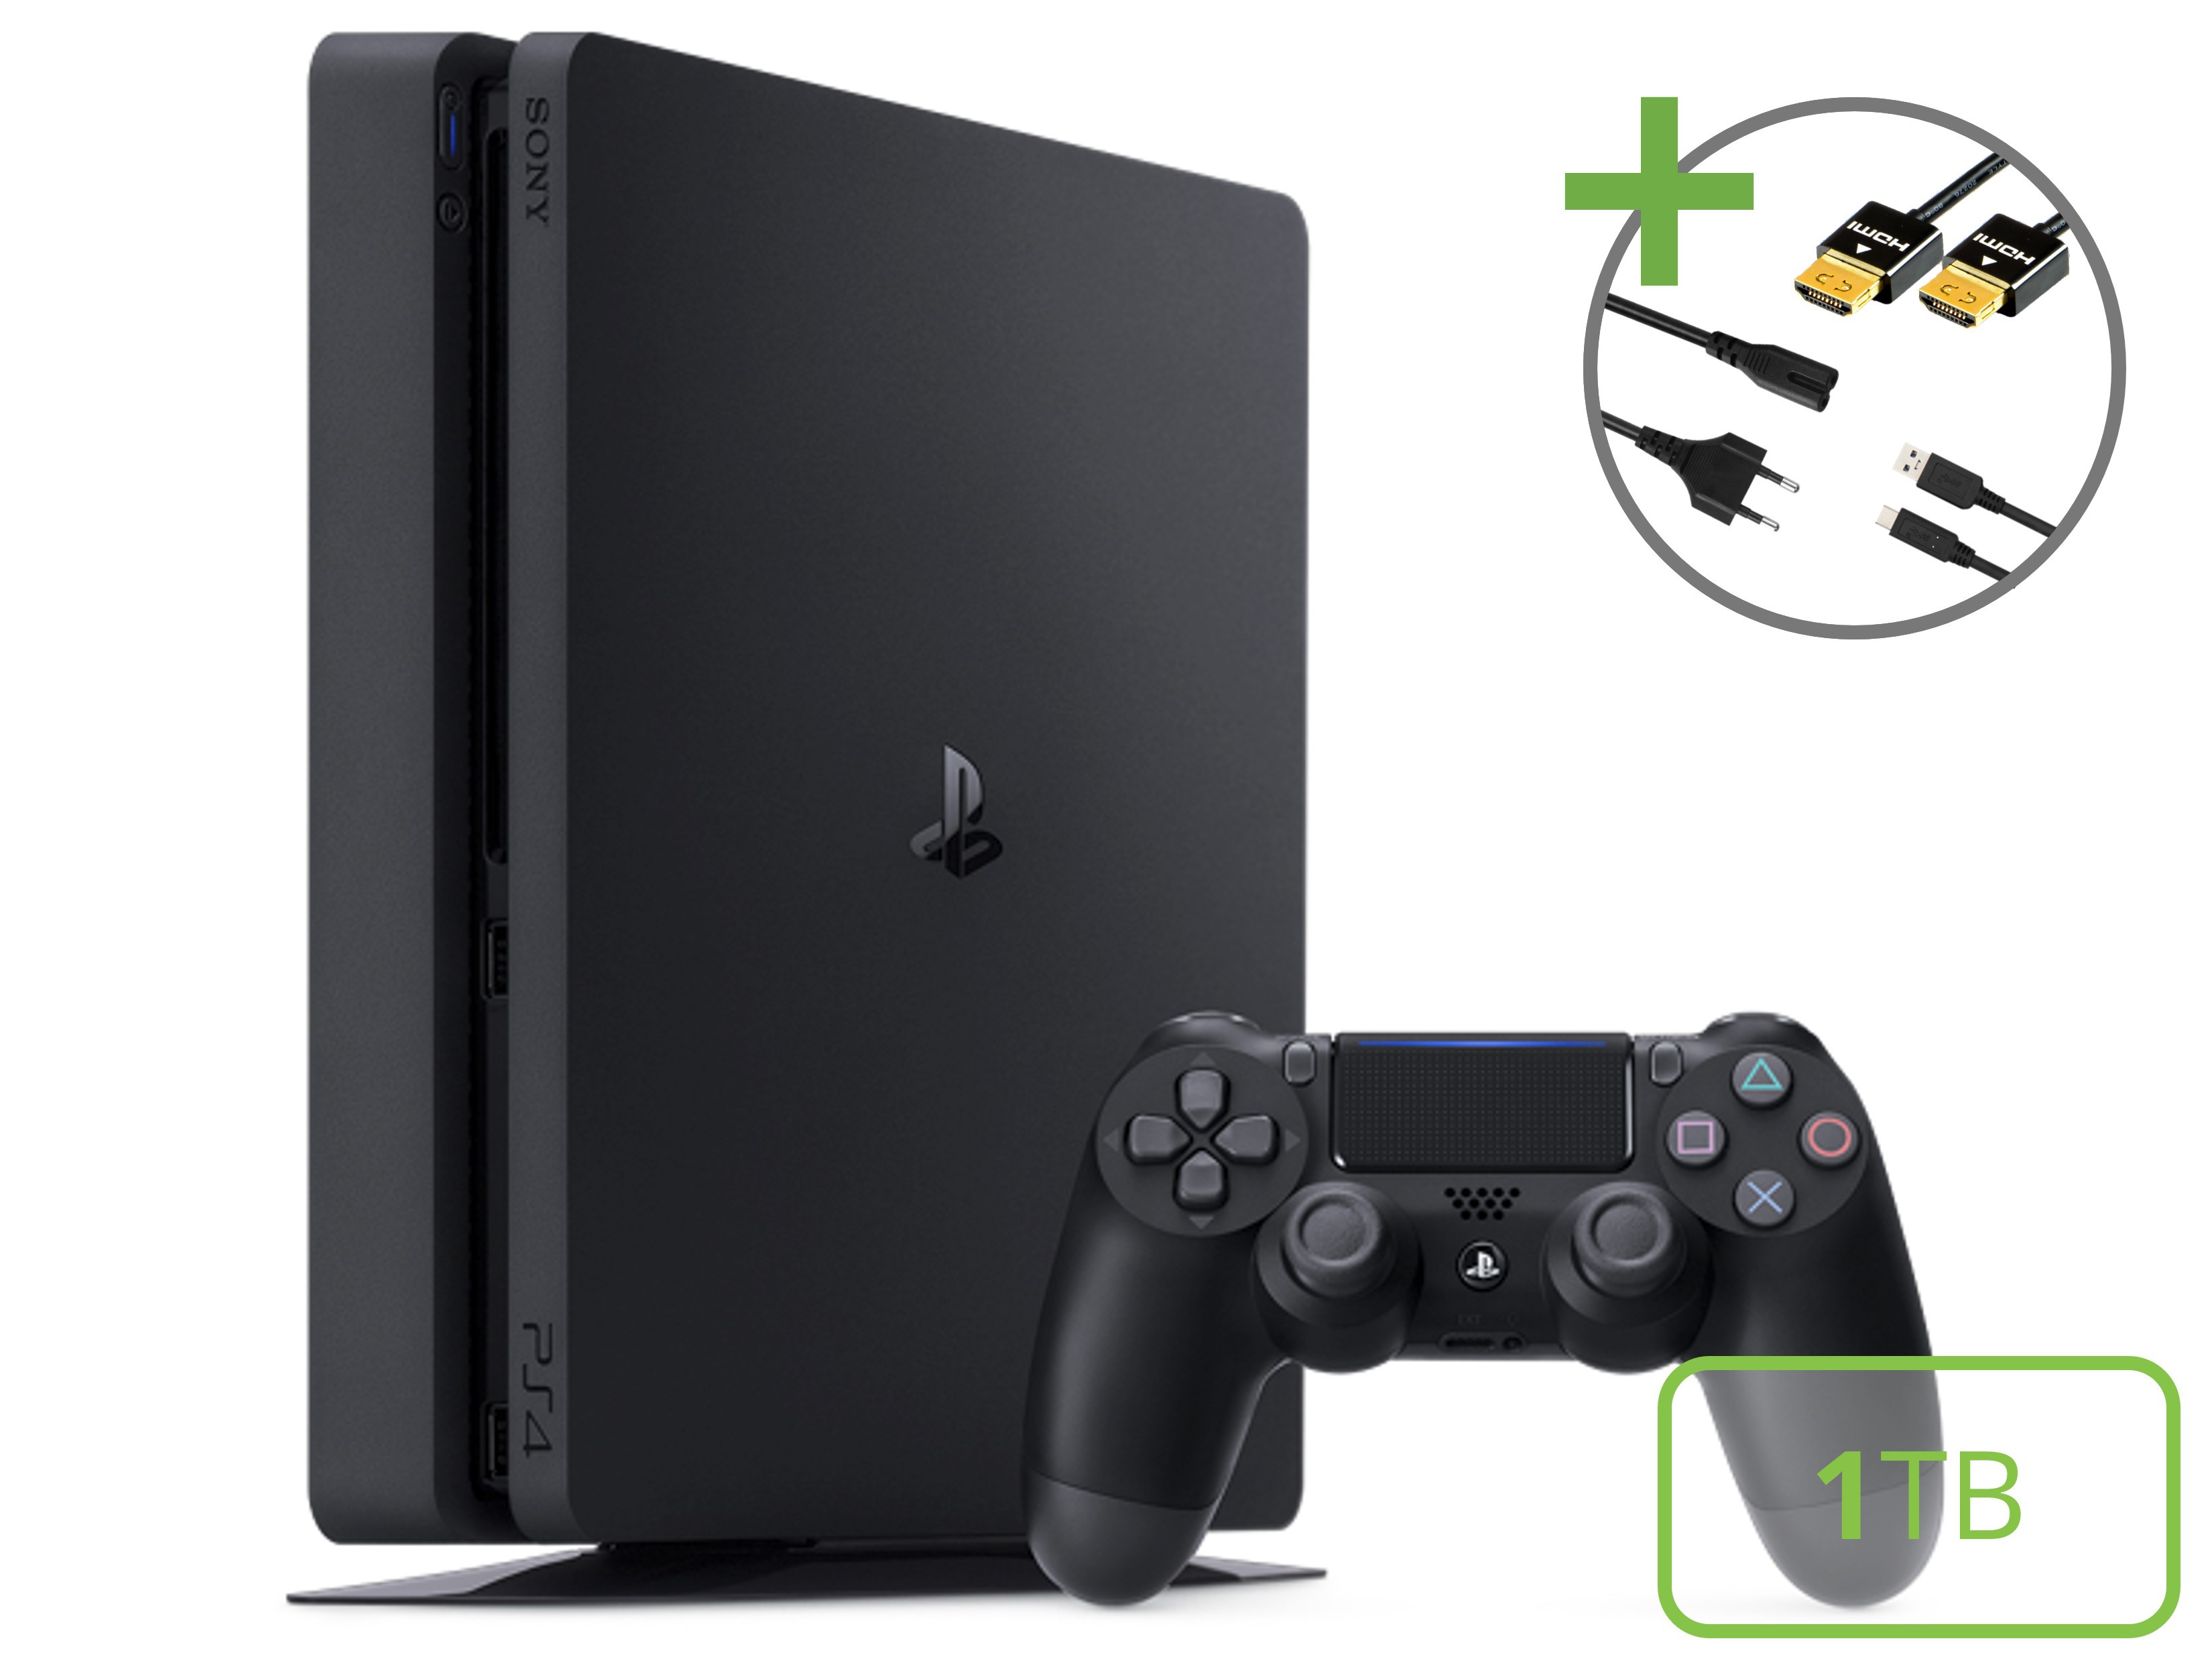 Sony PlayStation 4 Slim Starter Pack - 1TB Ratchet & Clank Edition - Playstation 4 Hardware - 2